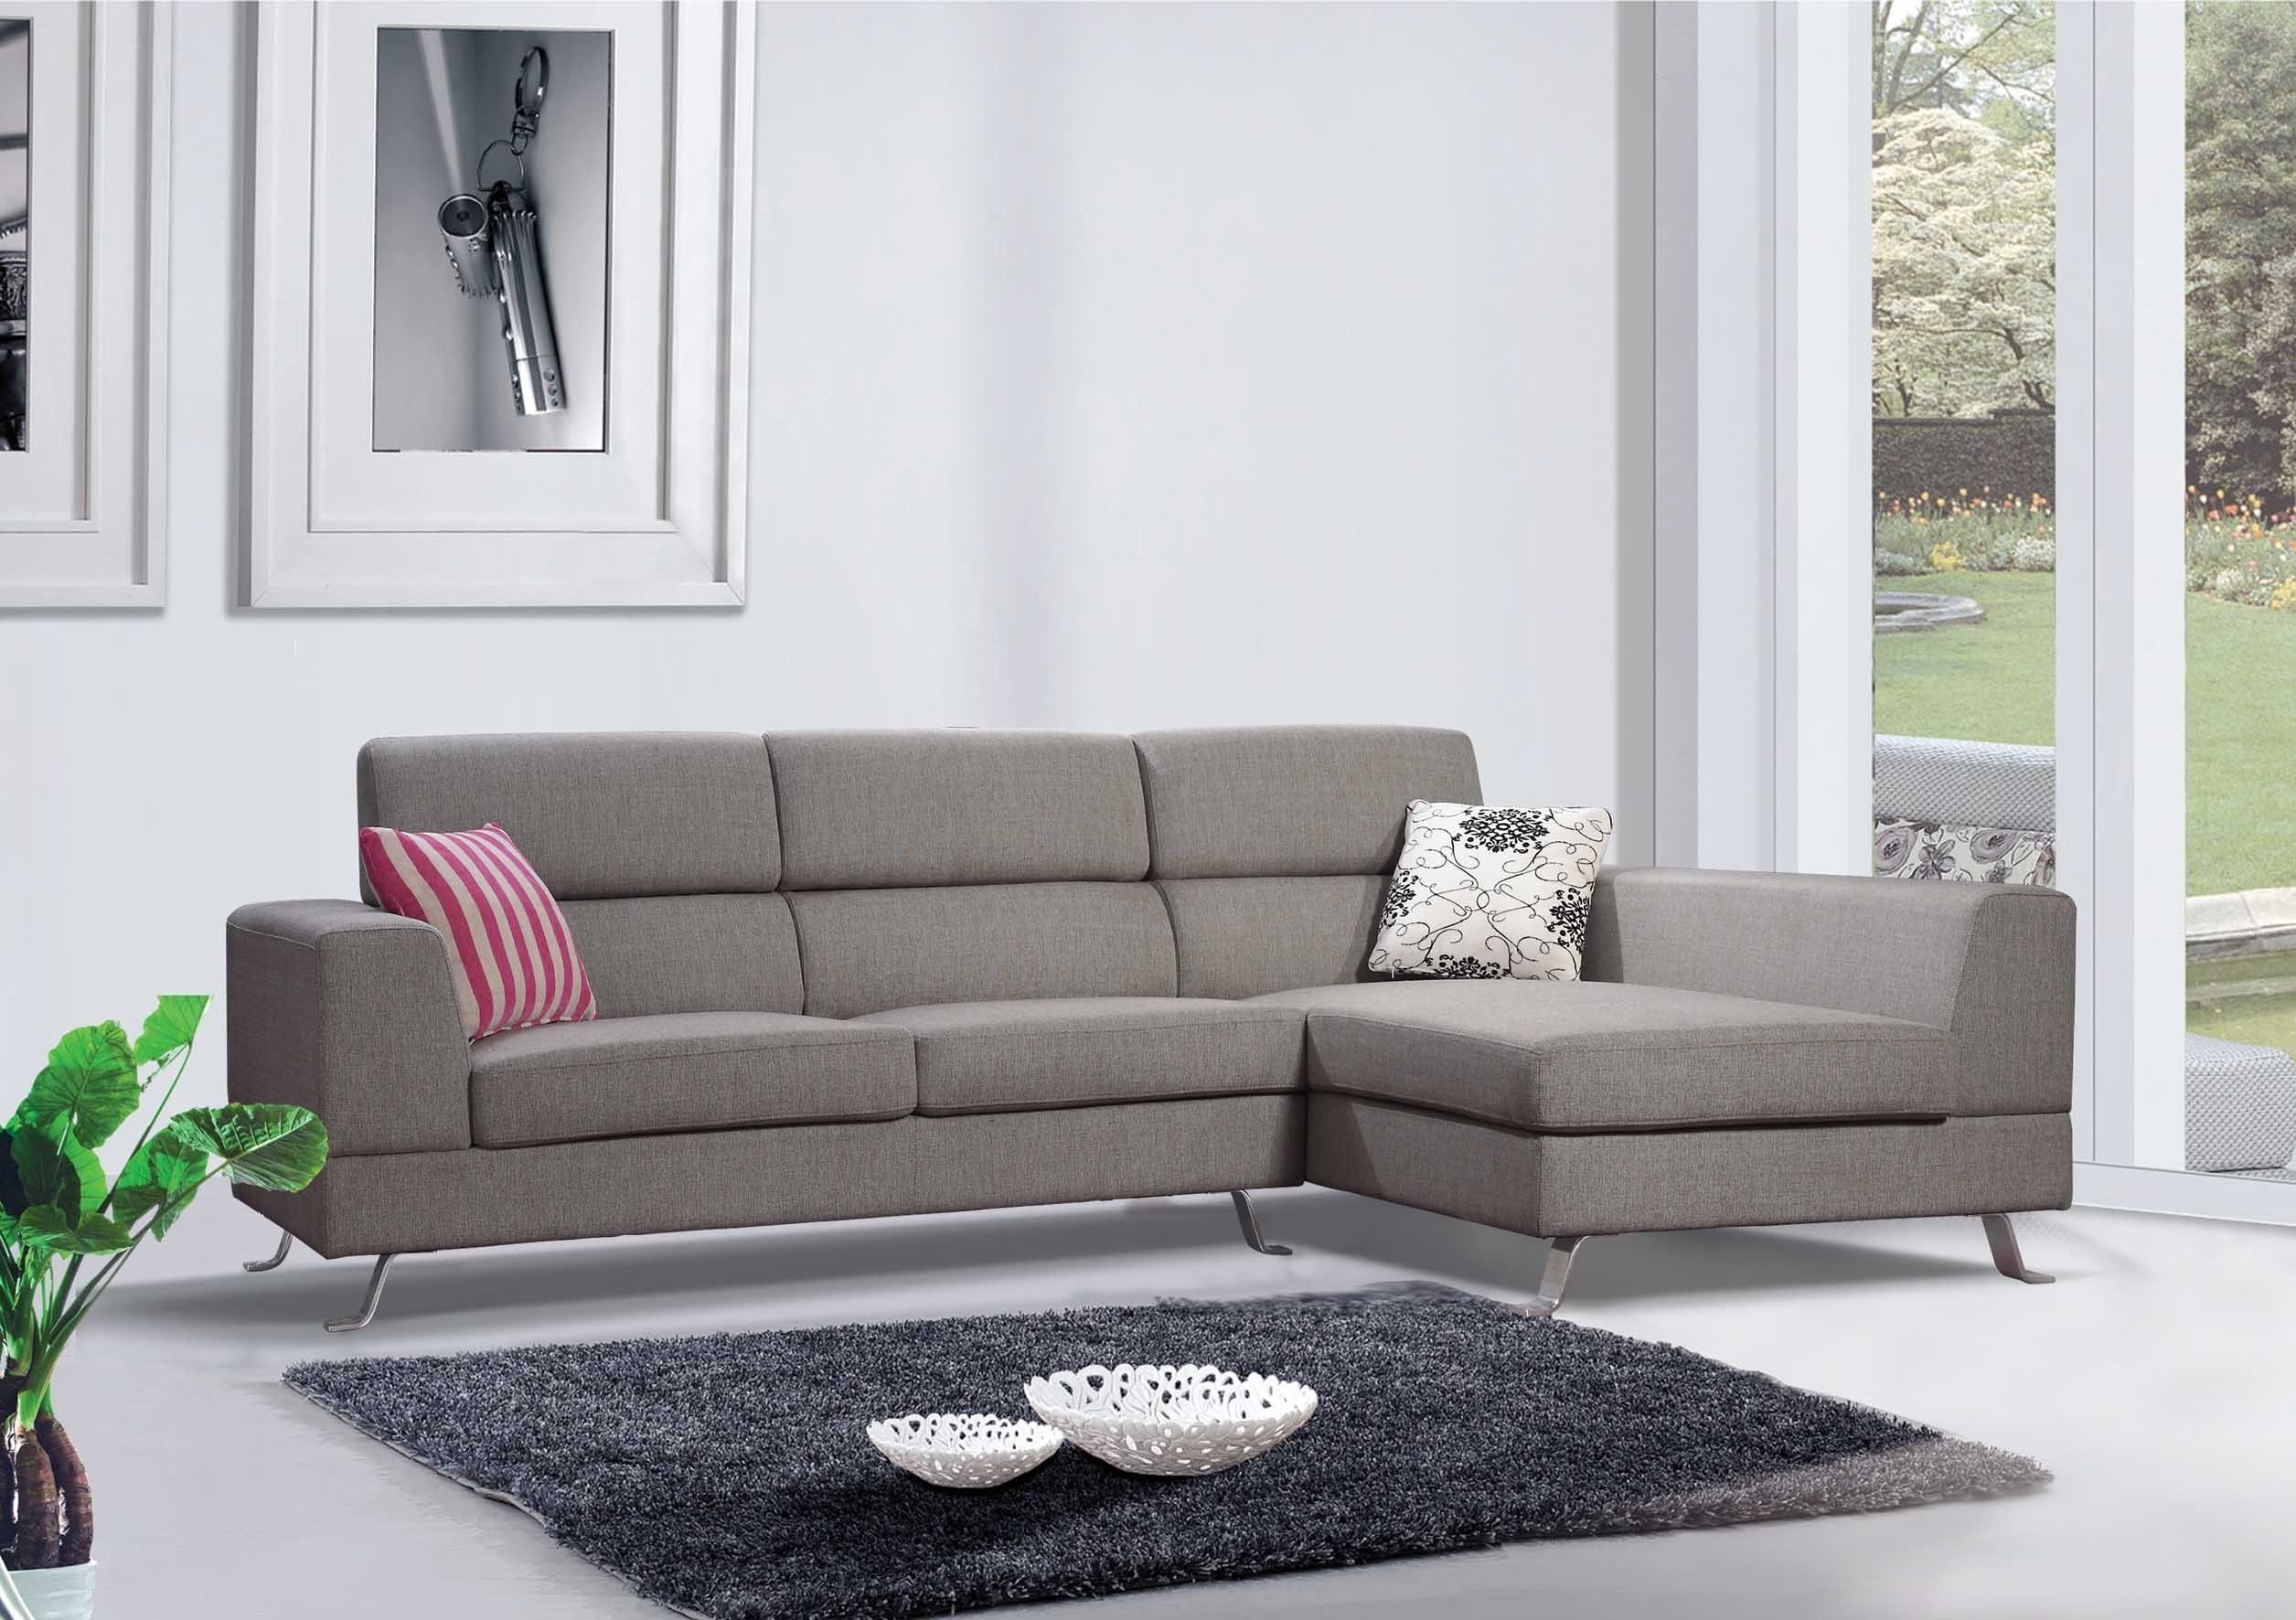 Furniture : Sectional Sofa 96x96 Sectional Sofa European Style Regarding Kijiji Montreal Sectional Sofas (View 8 of 10)